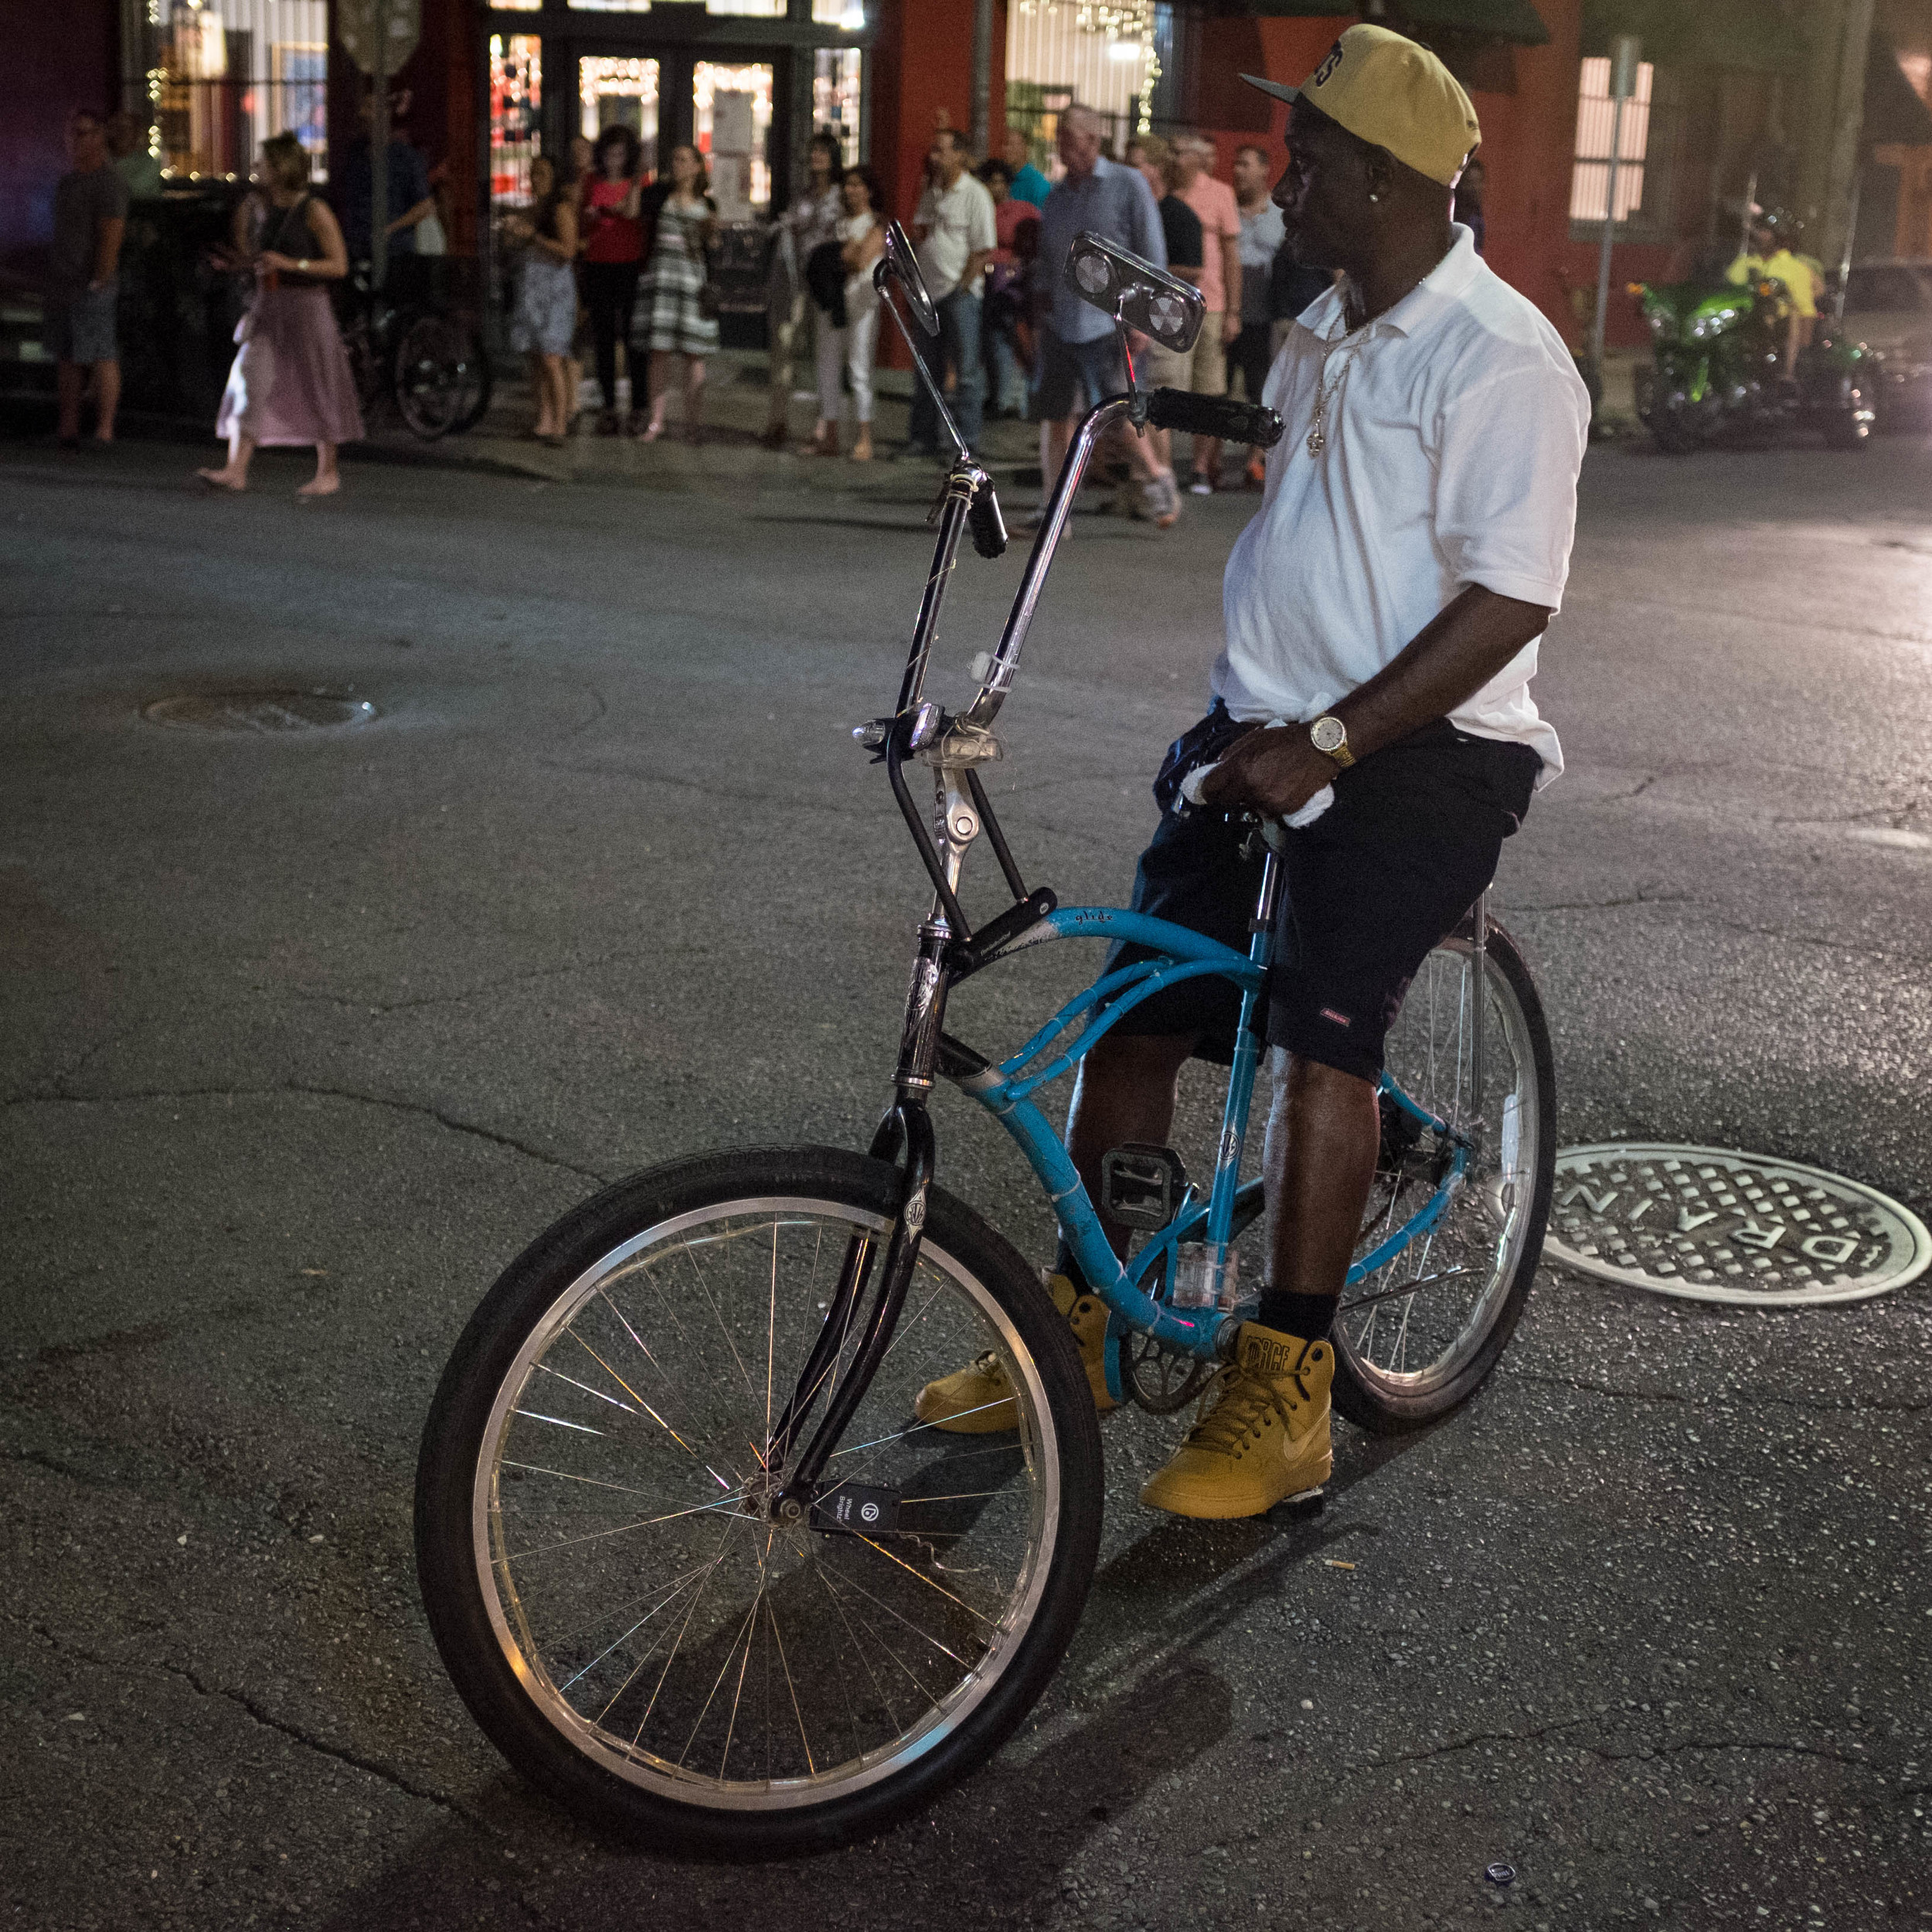  Man on bicycle New Orleans, LA Fuji X100T 6.16 